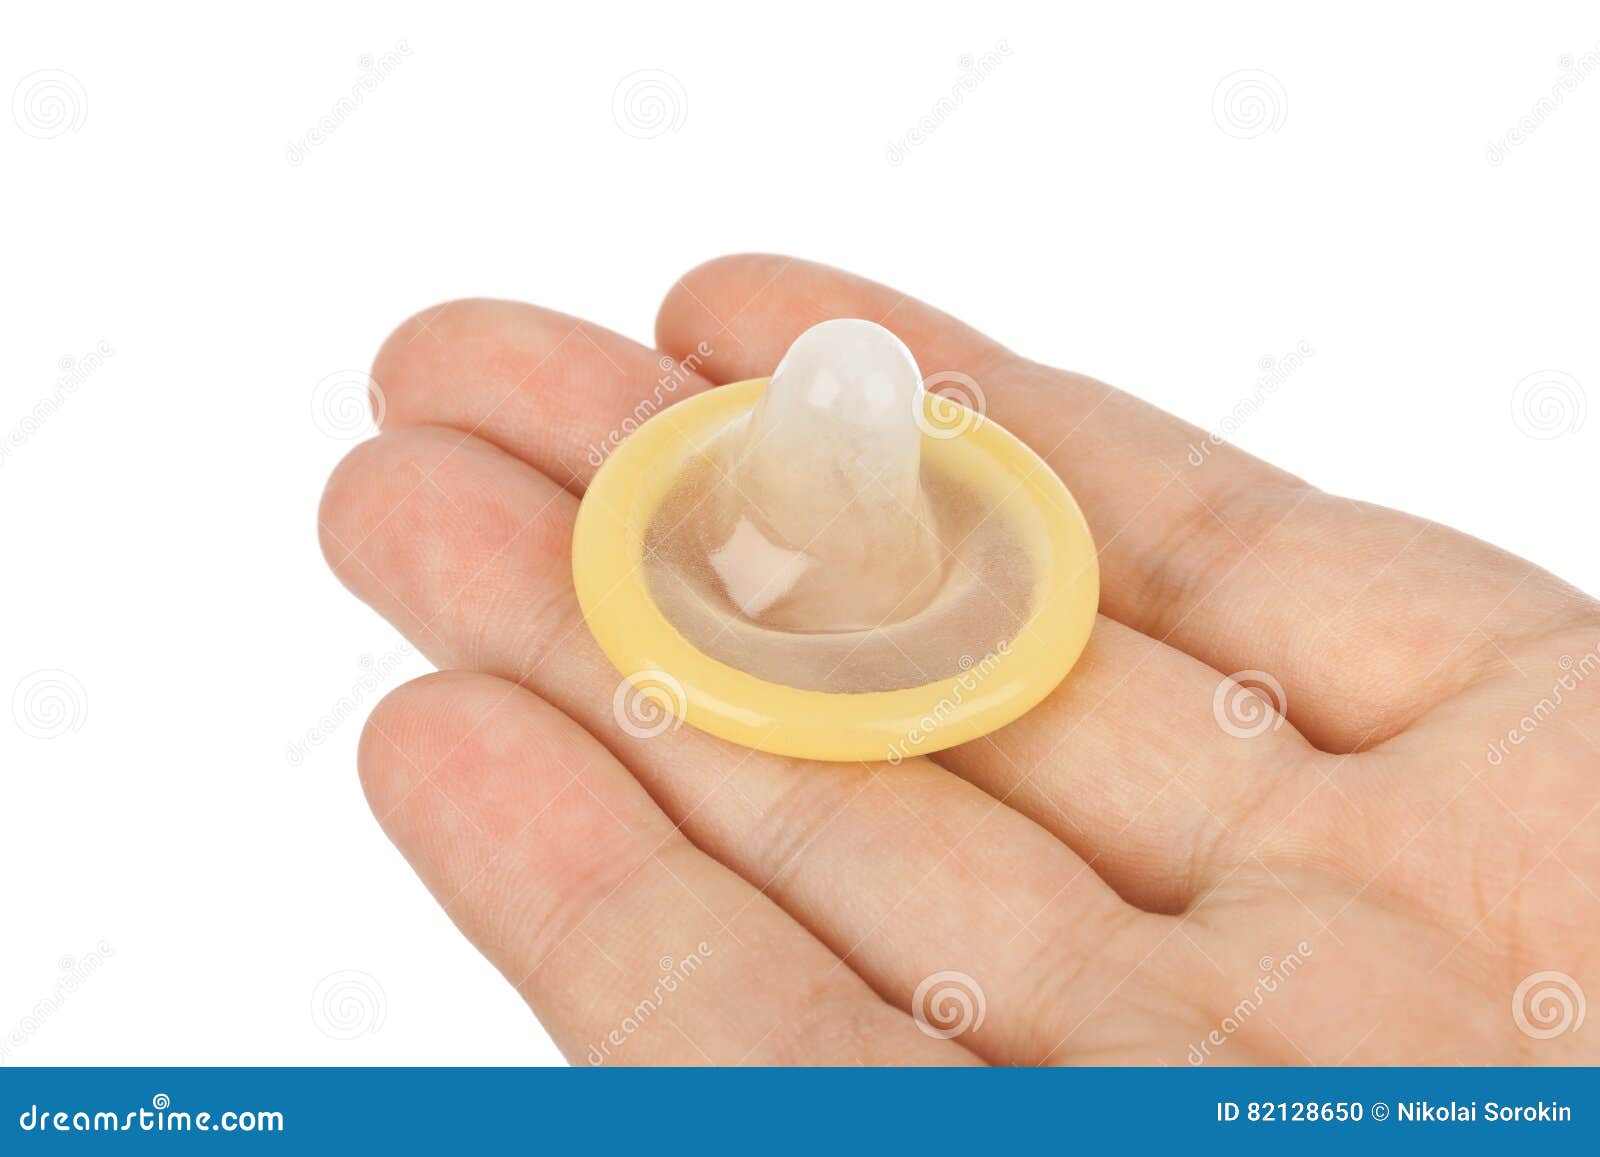 Картинки по запросу презерватив